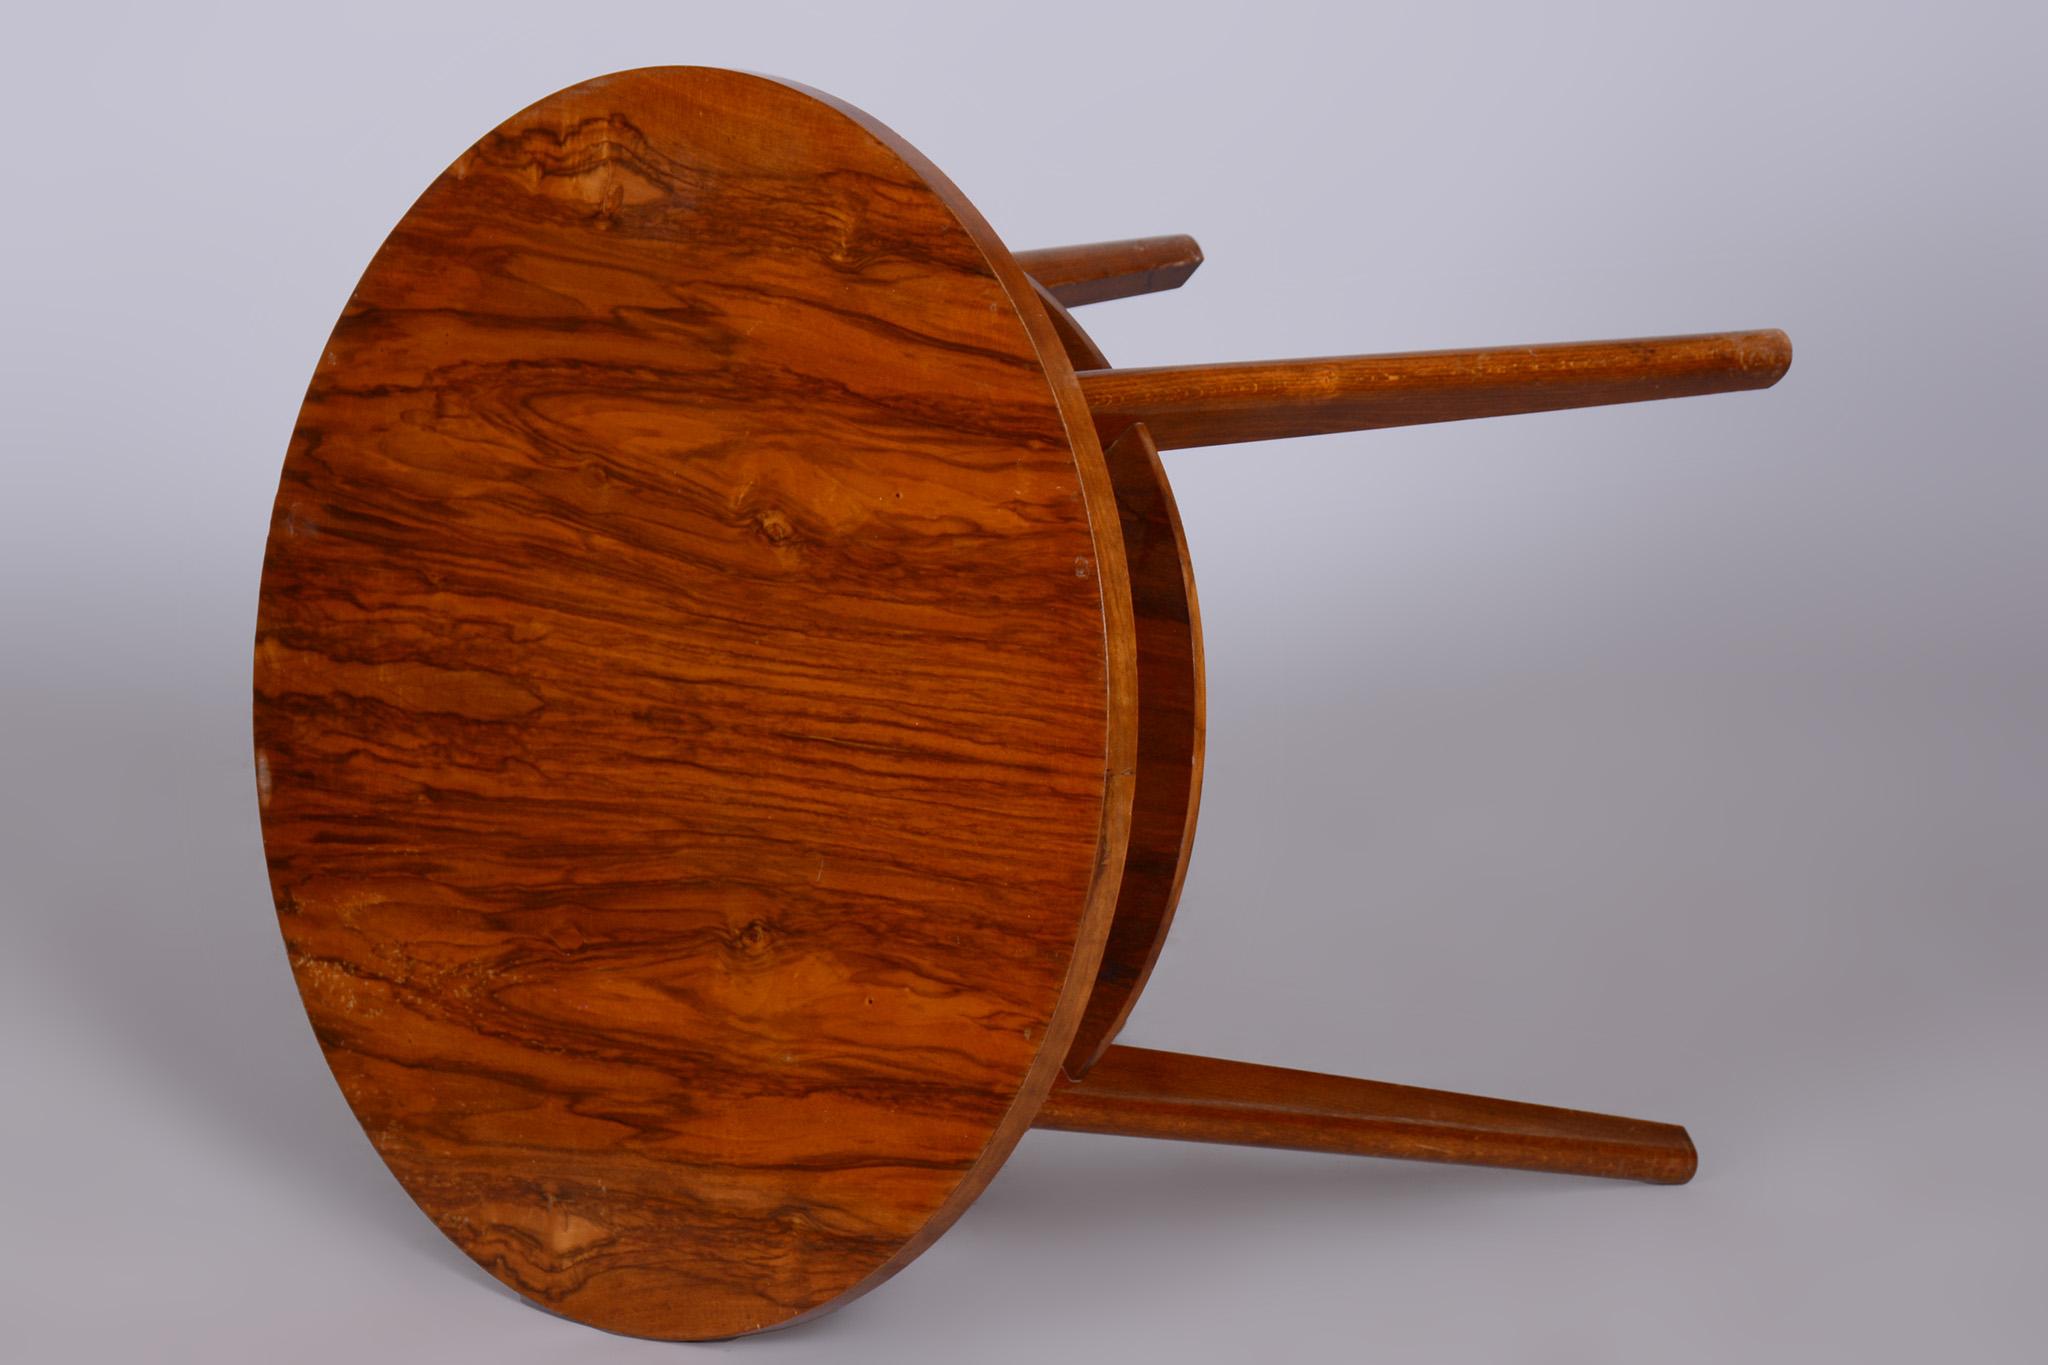 Wood Original Midcentury Small Round Table by Jitona, Beech, Walnut, Czechia, 1950s For Sale